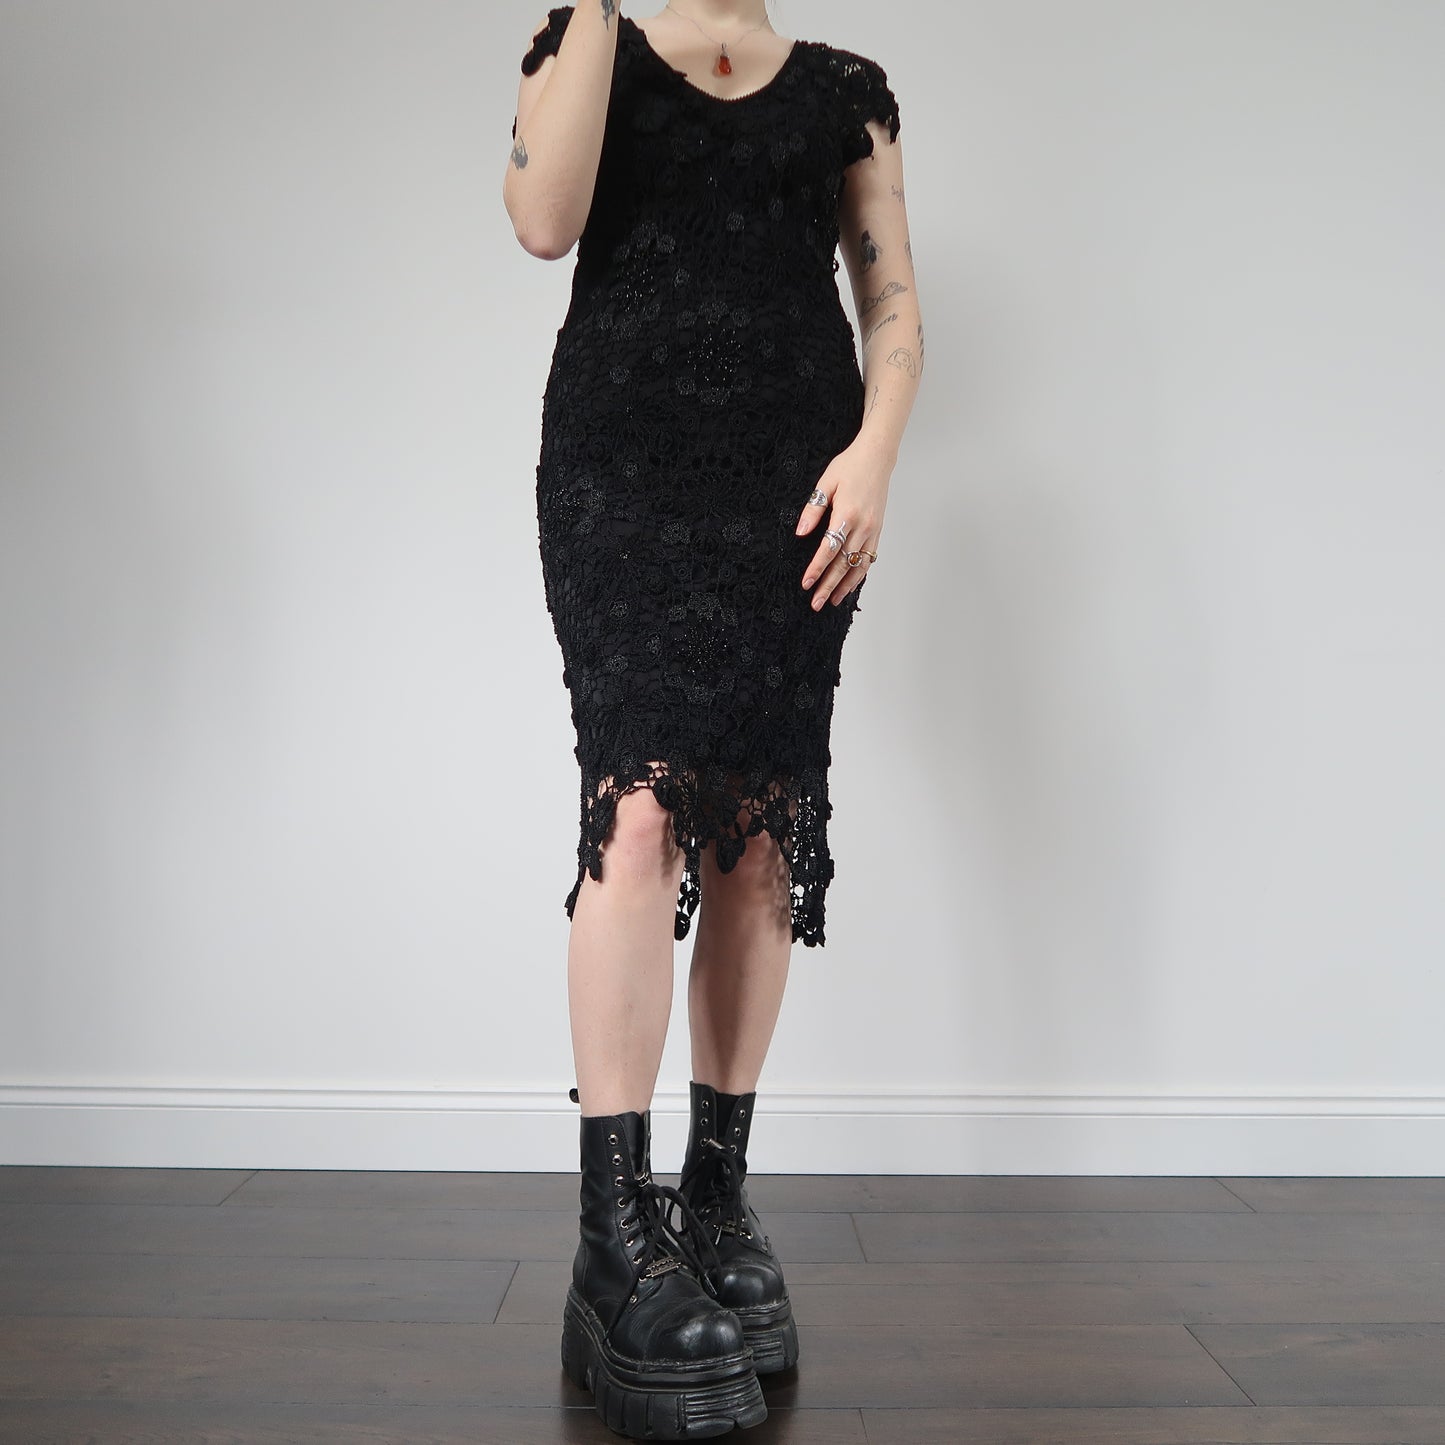 Black crochet dress - size 10